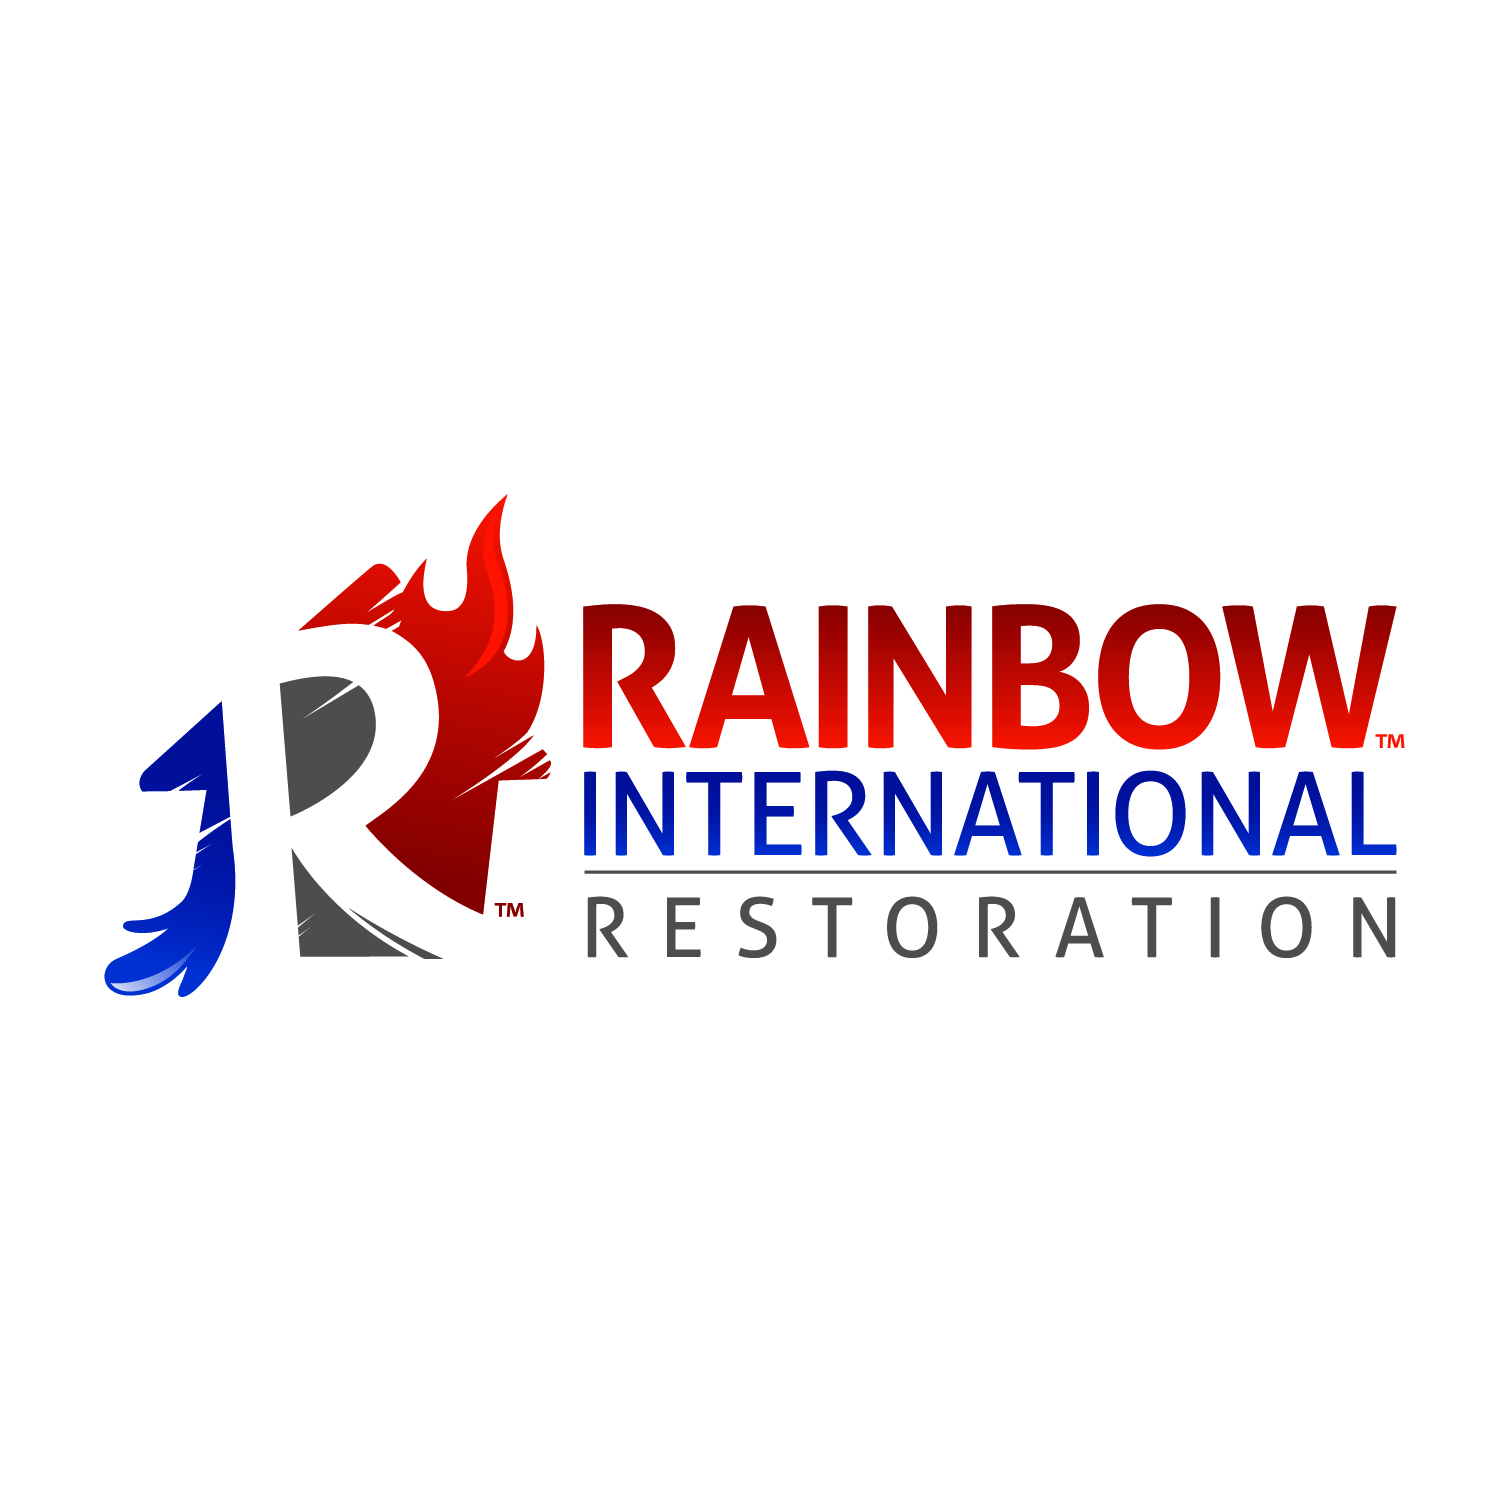 Rainbow International® Announces Plans to Add 14 New Franchise Units